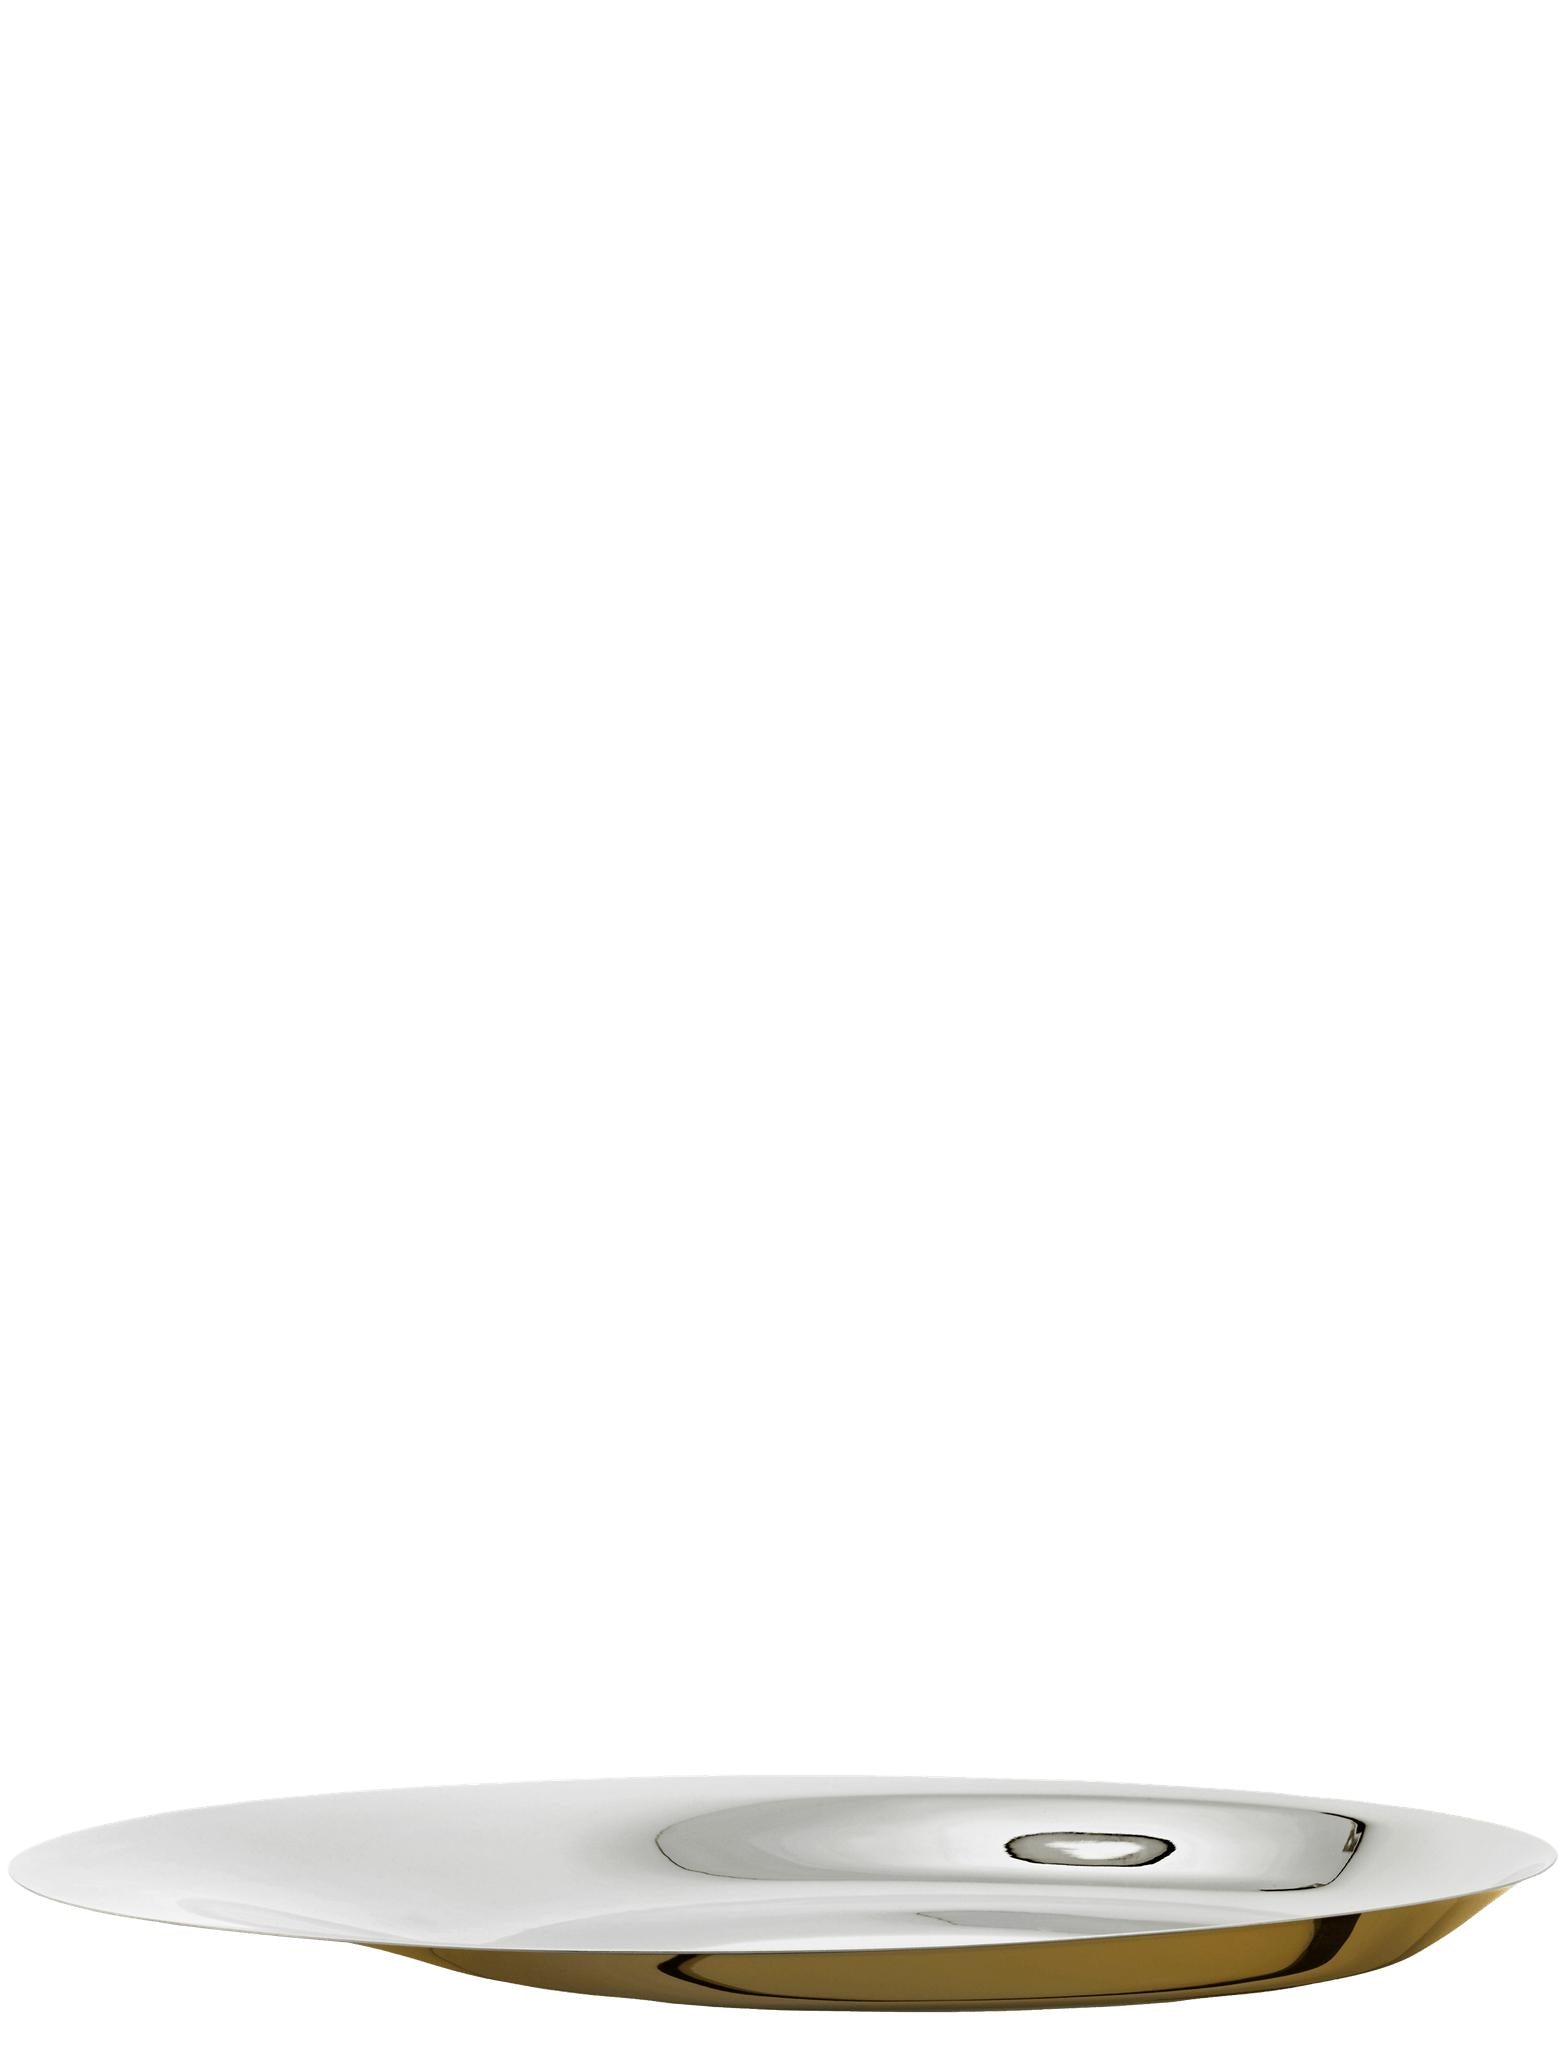 Stelton Norman Foster Bowl Ø 46 cm, gylden